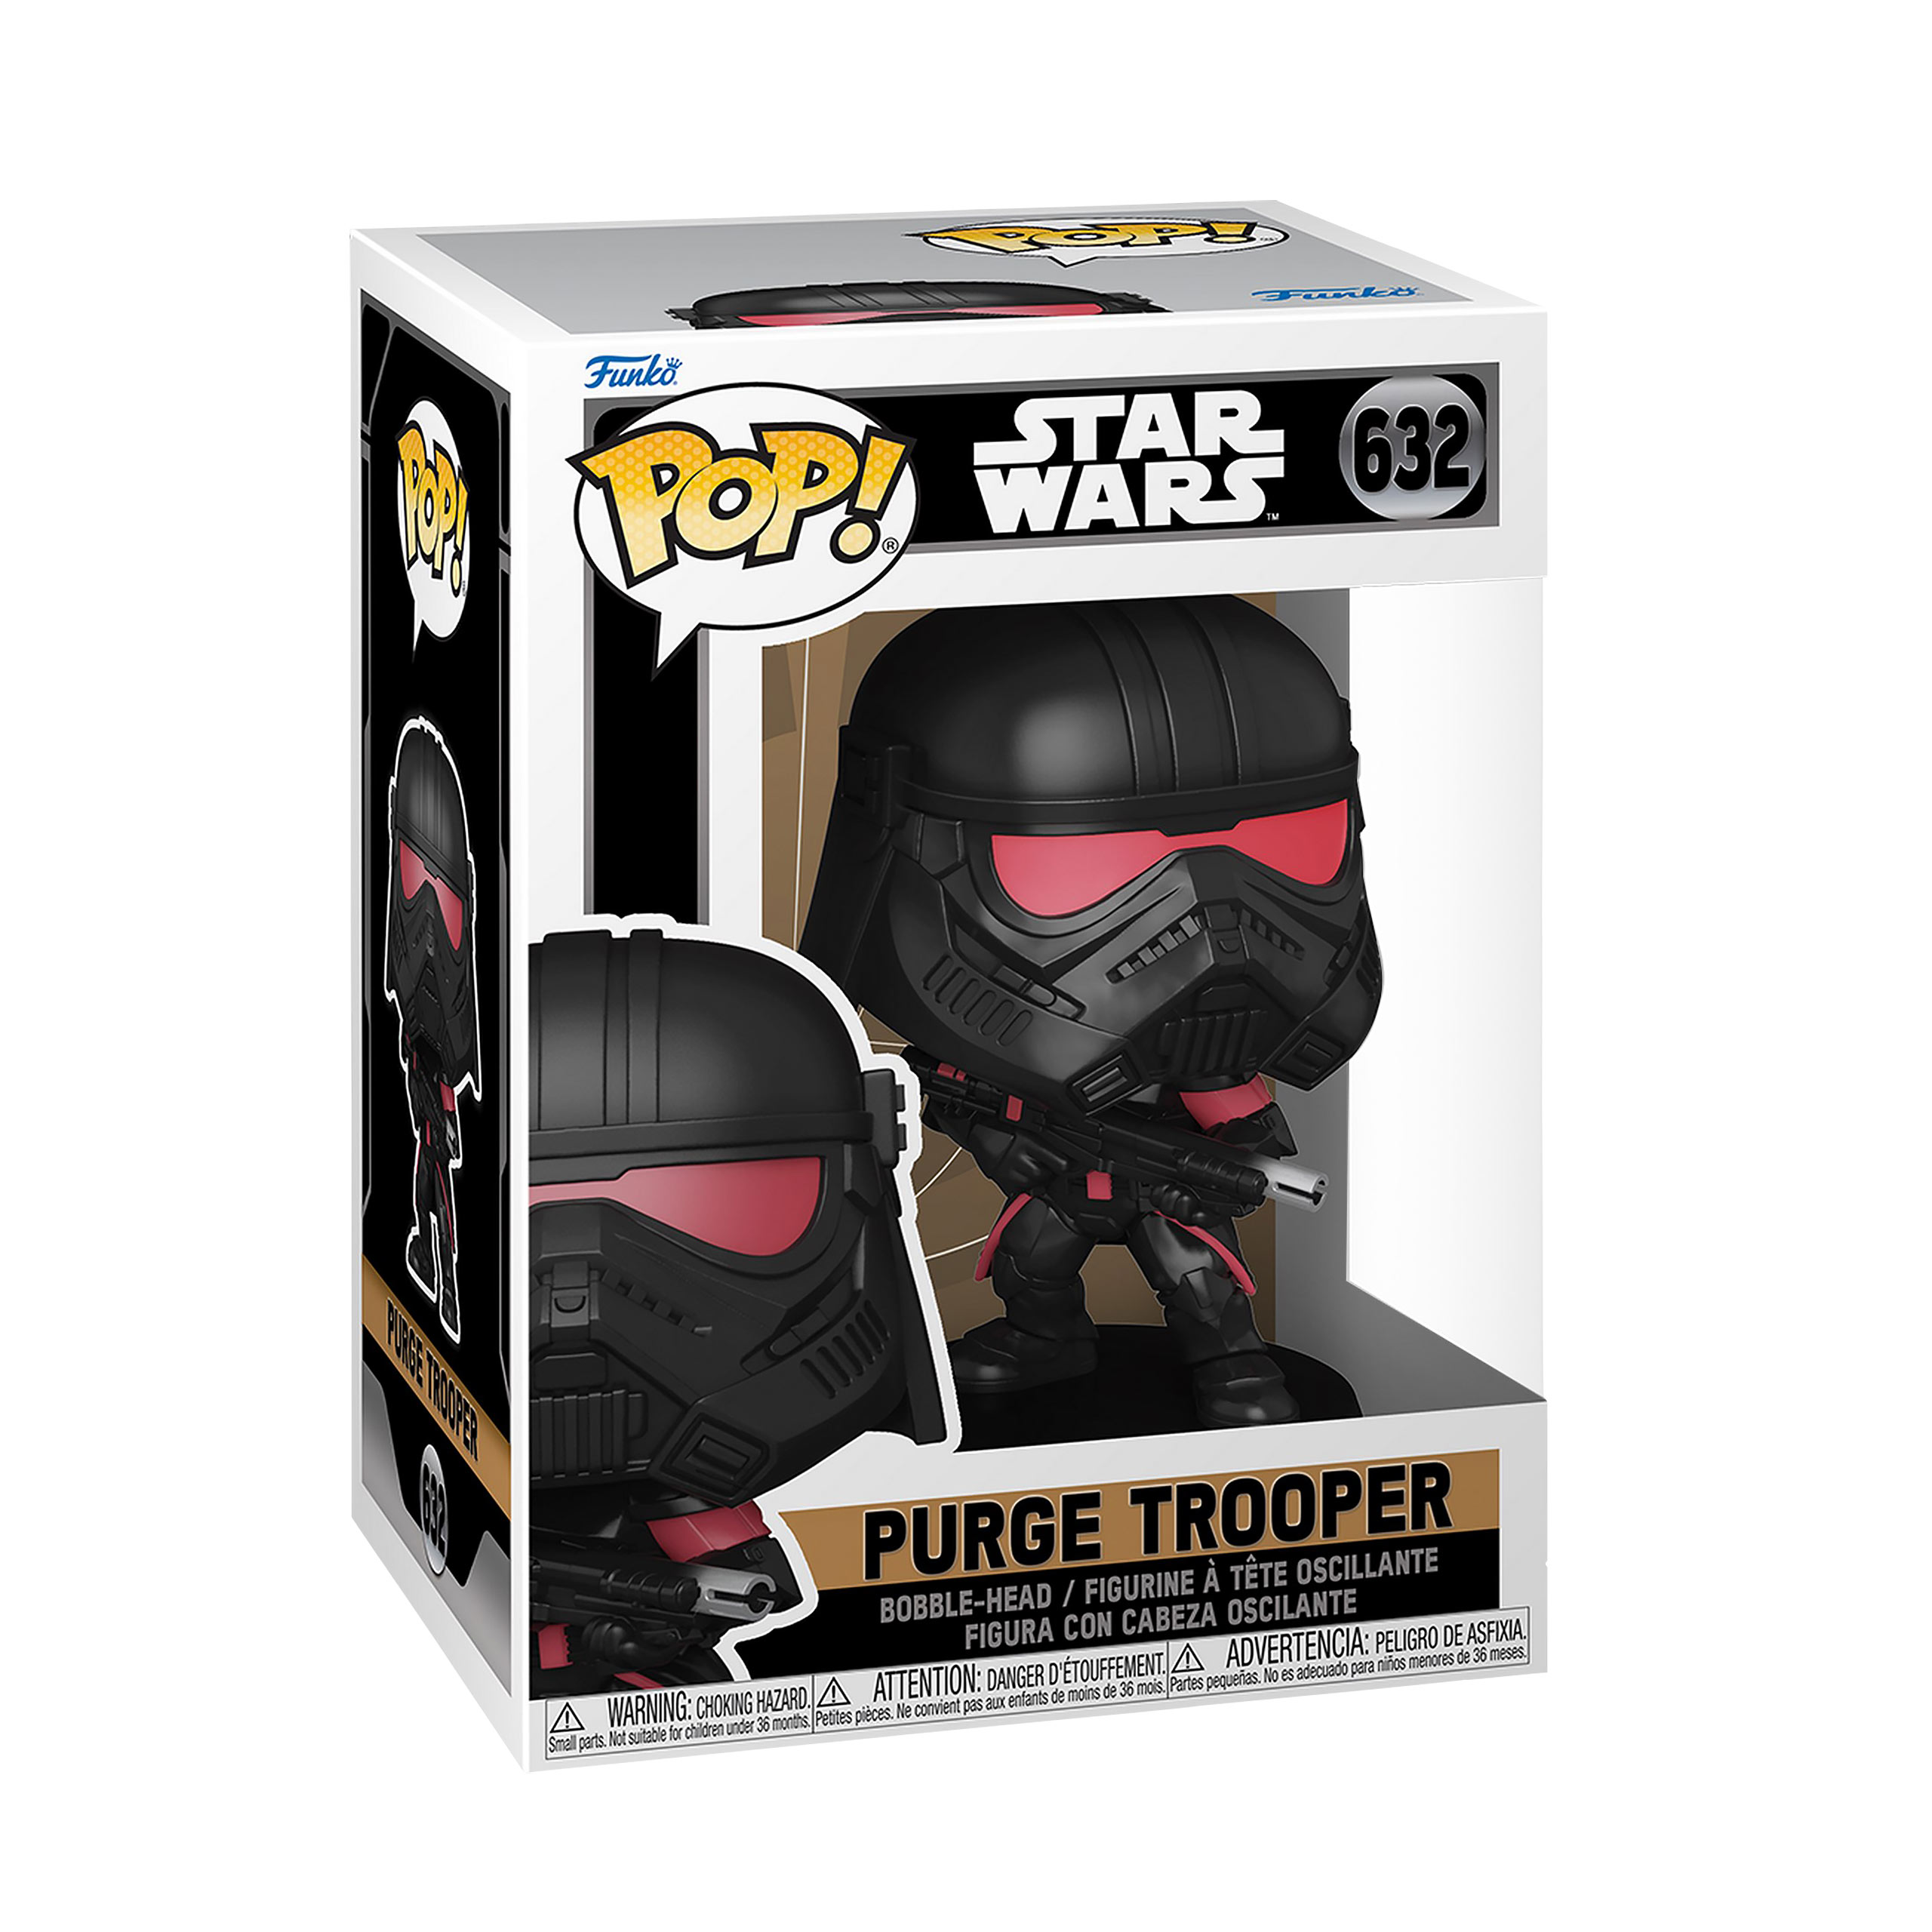 Star Wars Obi-Wan Kenobi - Purge Trooper Funko Pop Bobblehead Figure